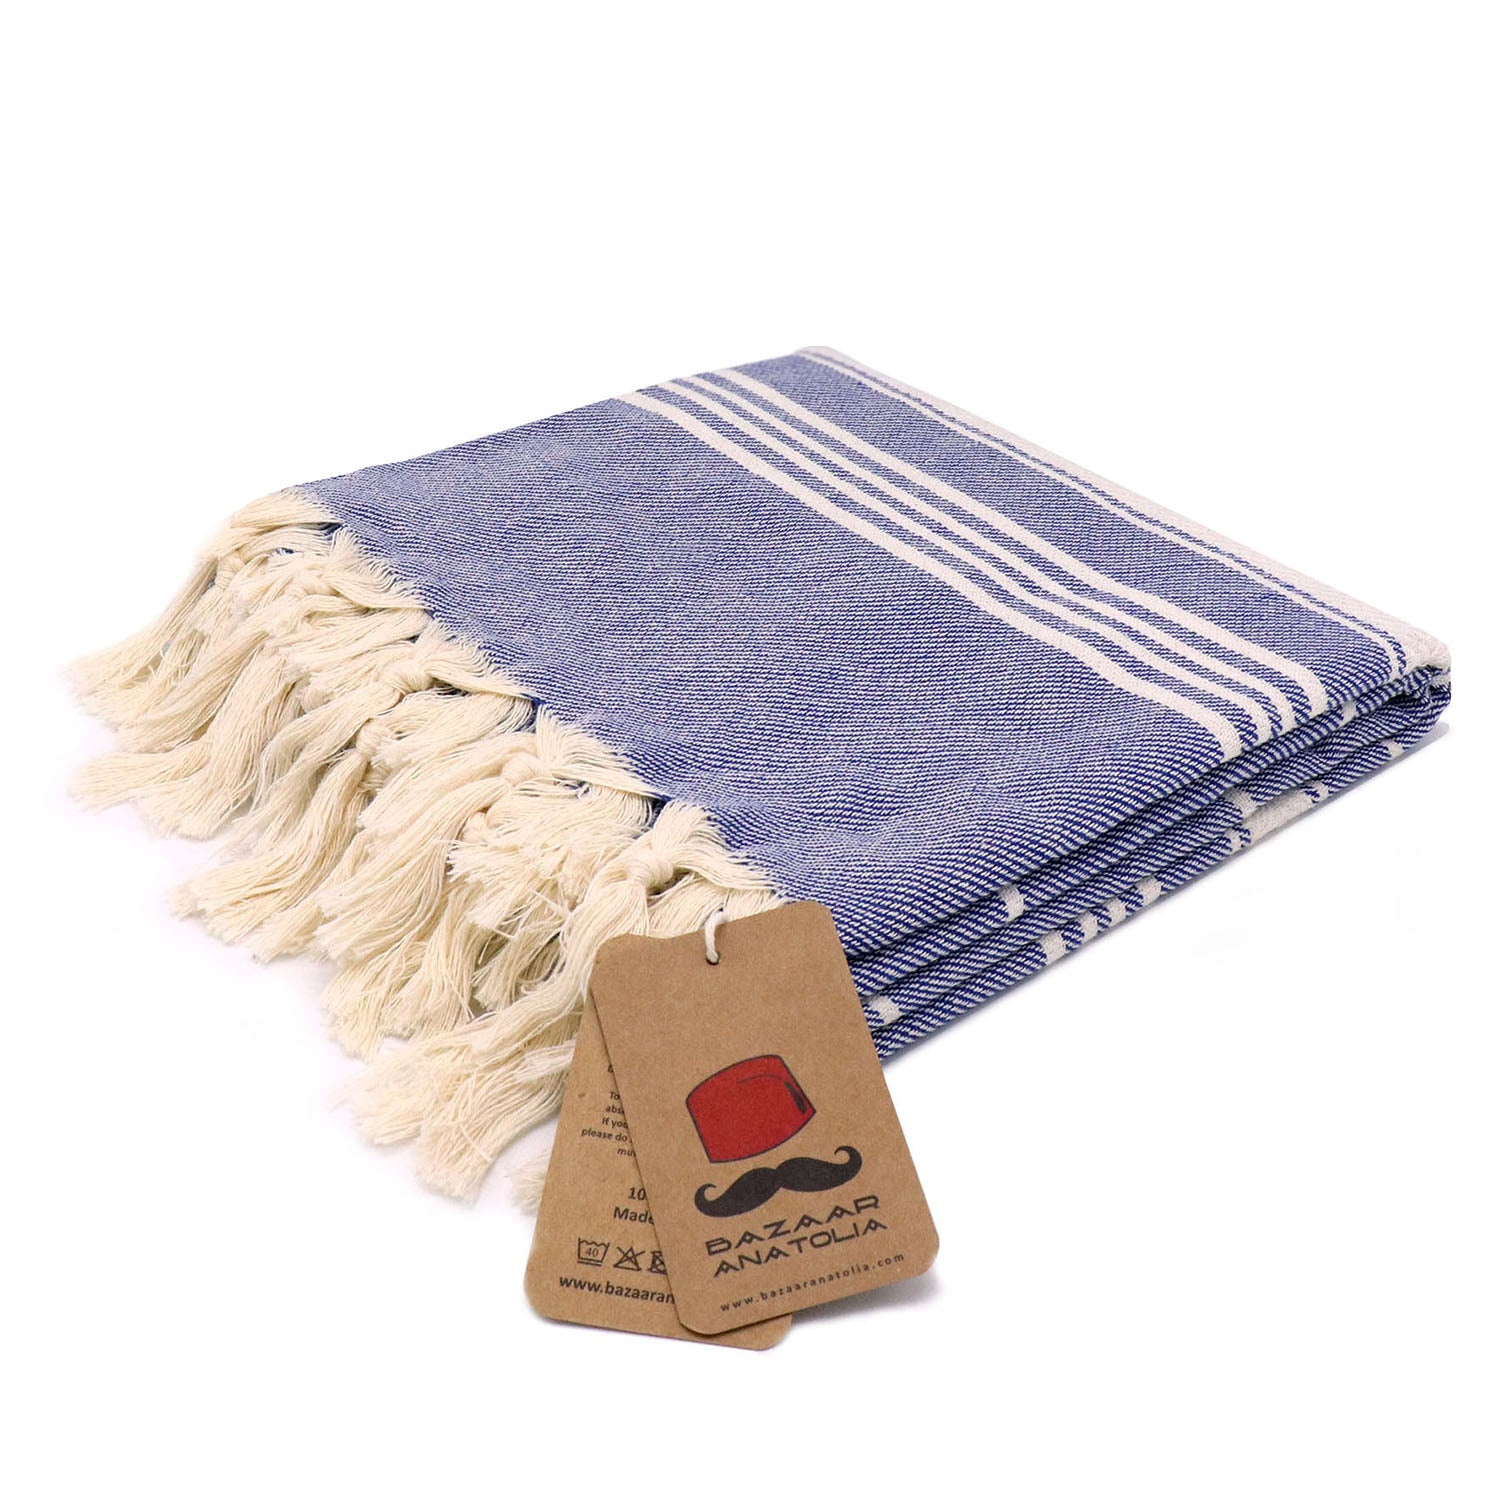 NERENZA Premium Turkish Beach Towel Cotton Peshtemal - Stylish Turkish Bath  Towels Extra Large Blanket for Beach and Bathroom - Prewashed - 35 x 70